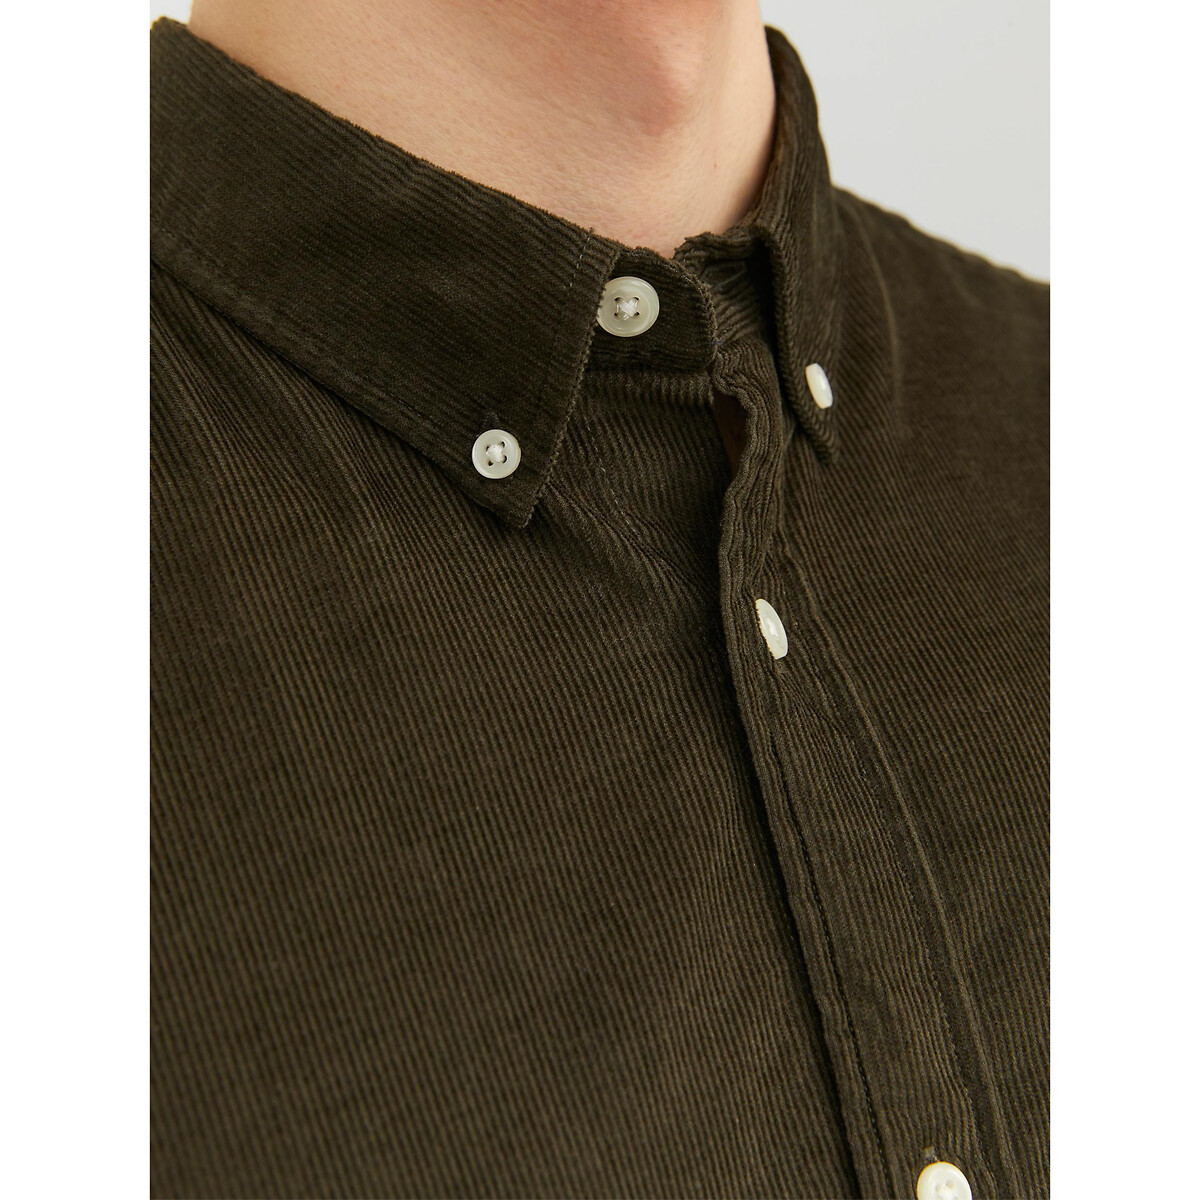 Рубашка Однотонная из велюра Jjeclassic L зеленый LaRedoute, размер L - фото 3